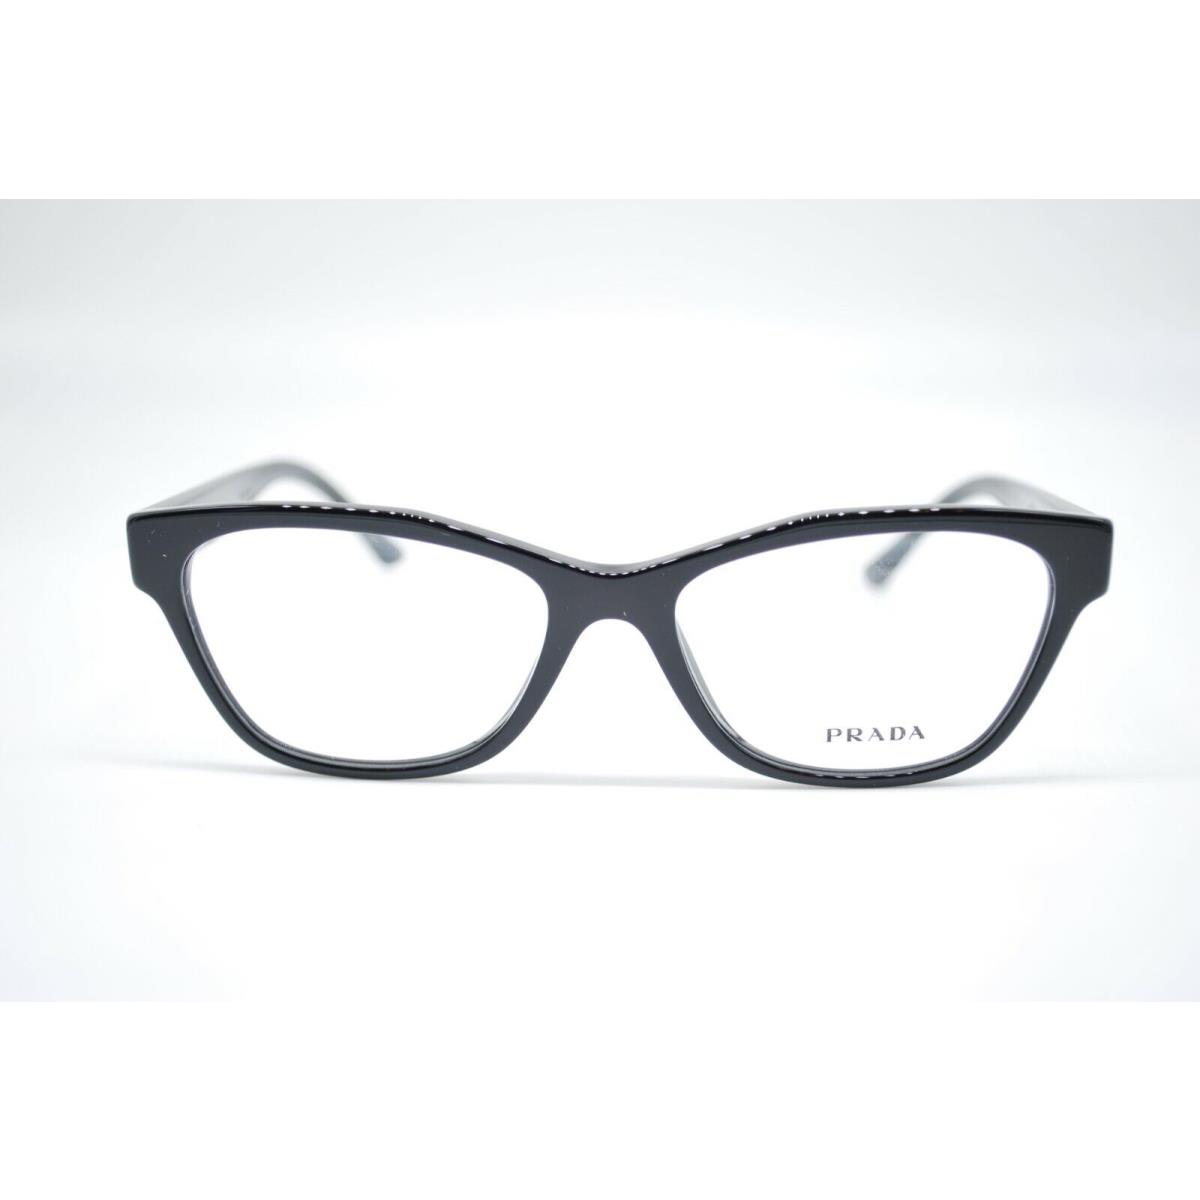 Prada eyeglasses VPR - Frame: Black 1